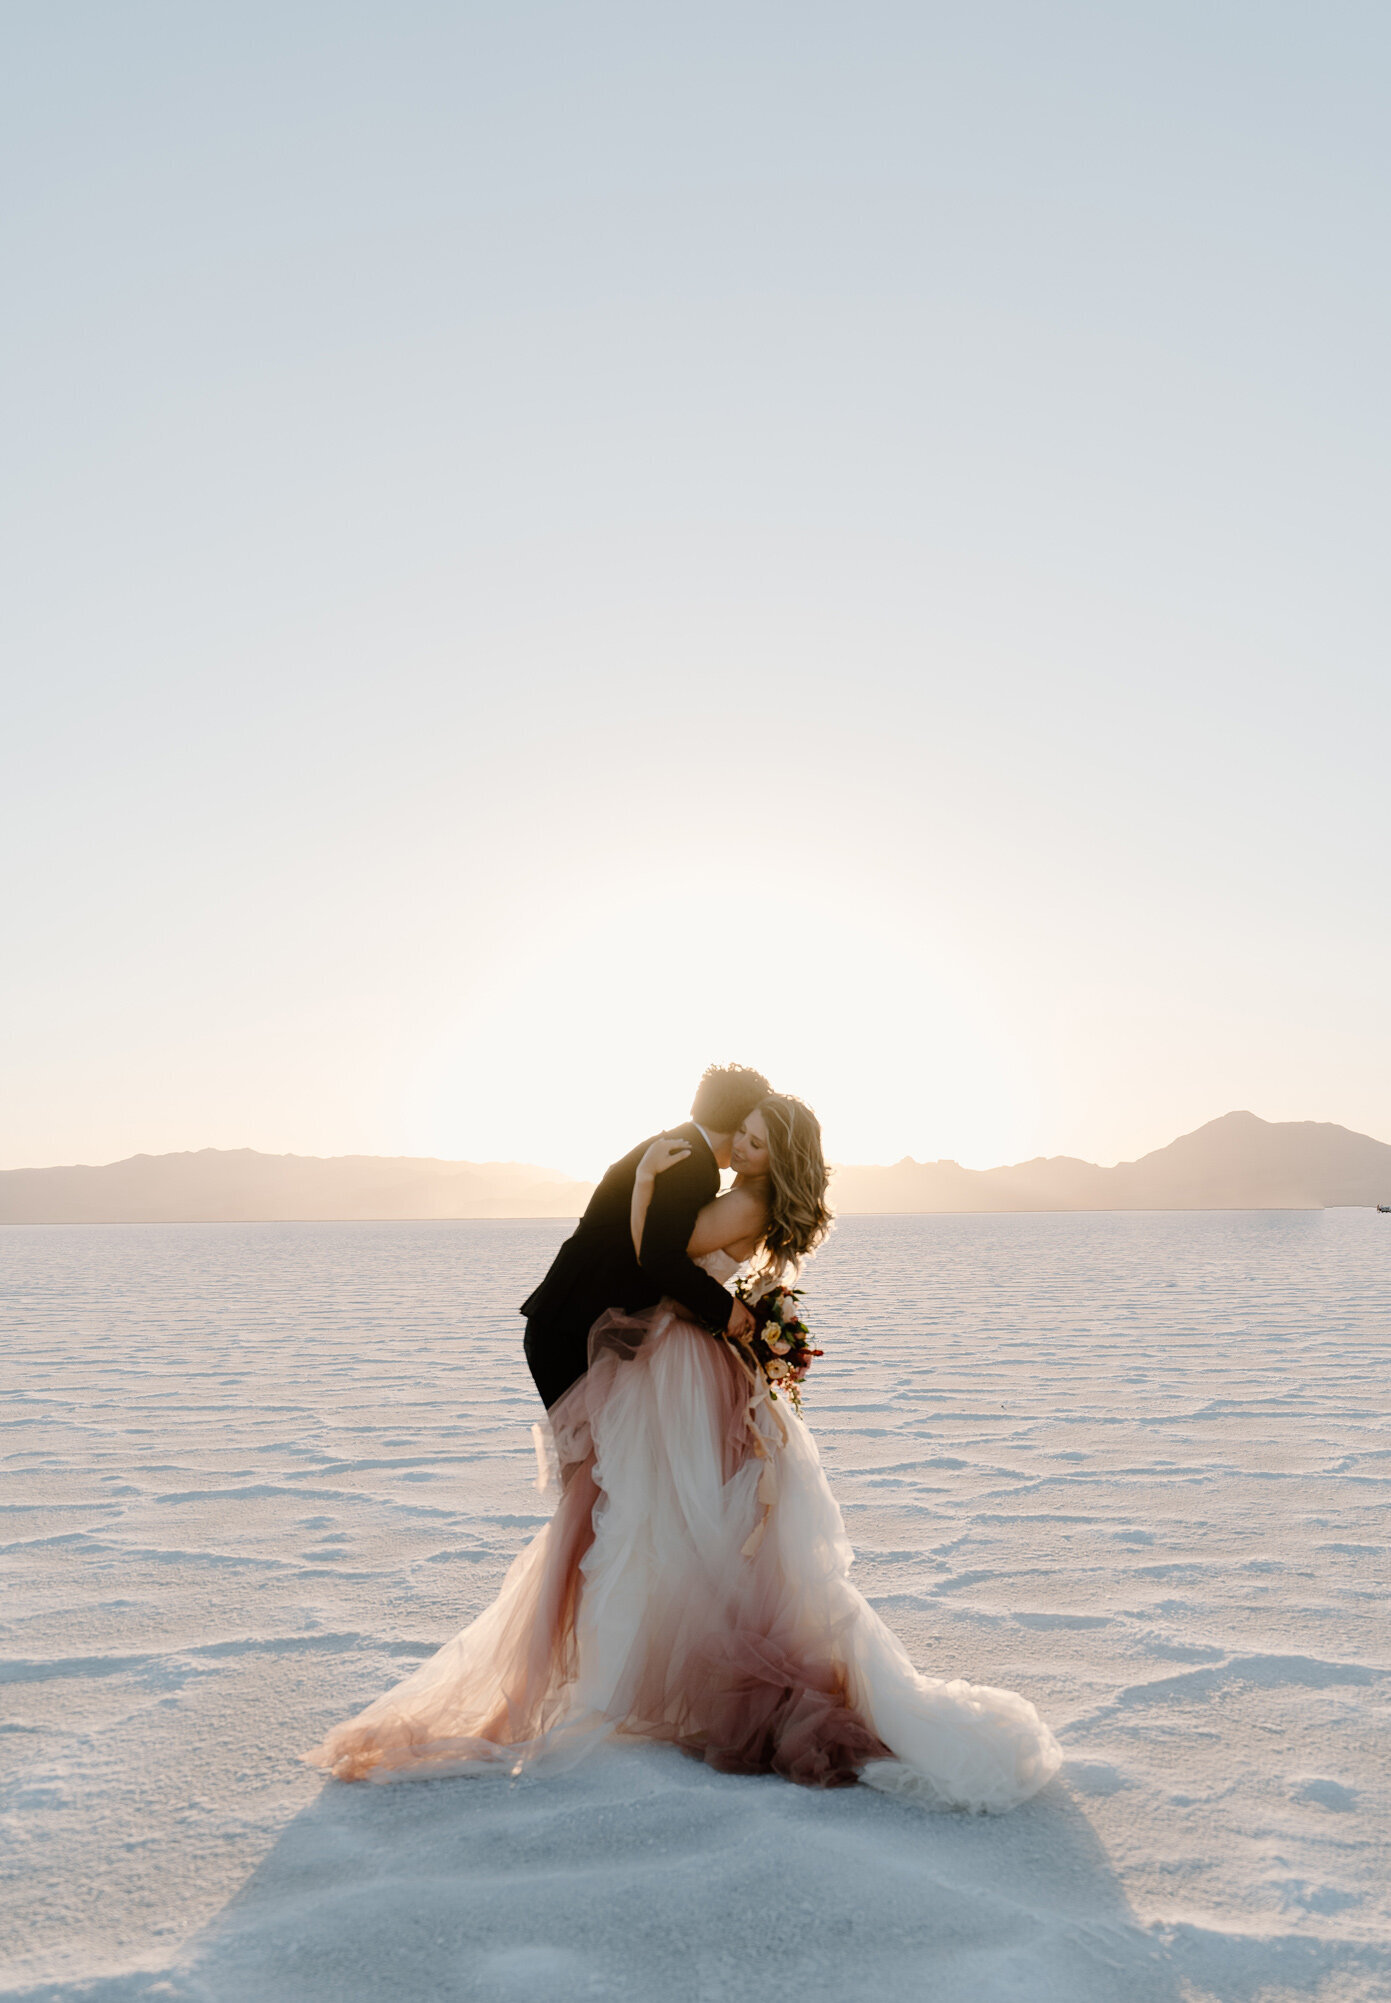 Beautiful sunset wedding photos of a couple in a Vera Wang dress at the Salt Flats in Salt Lake City, Utah